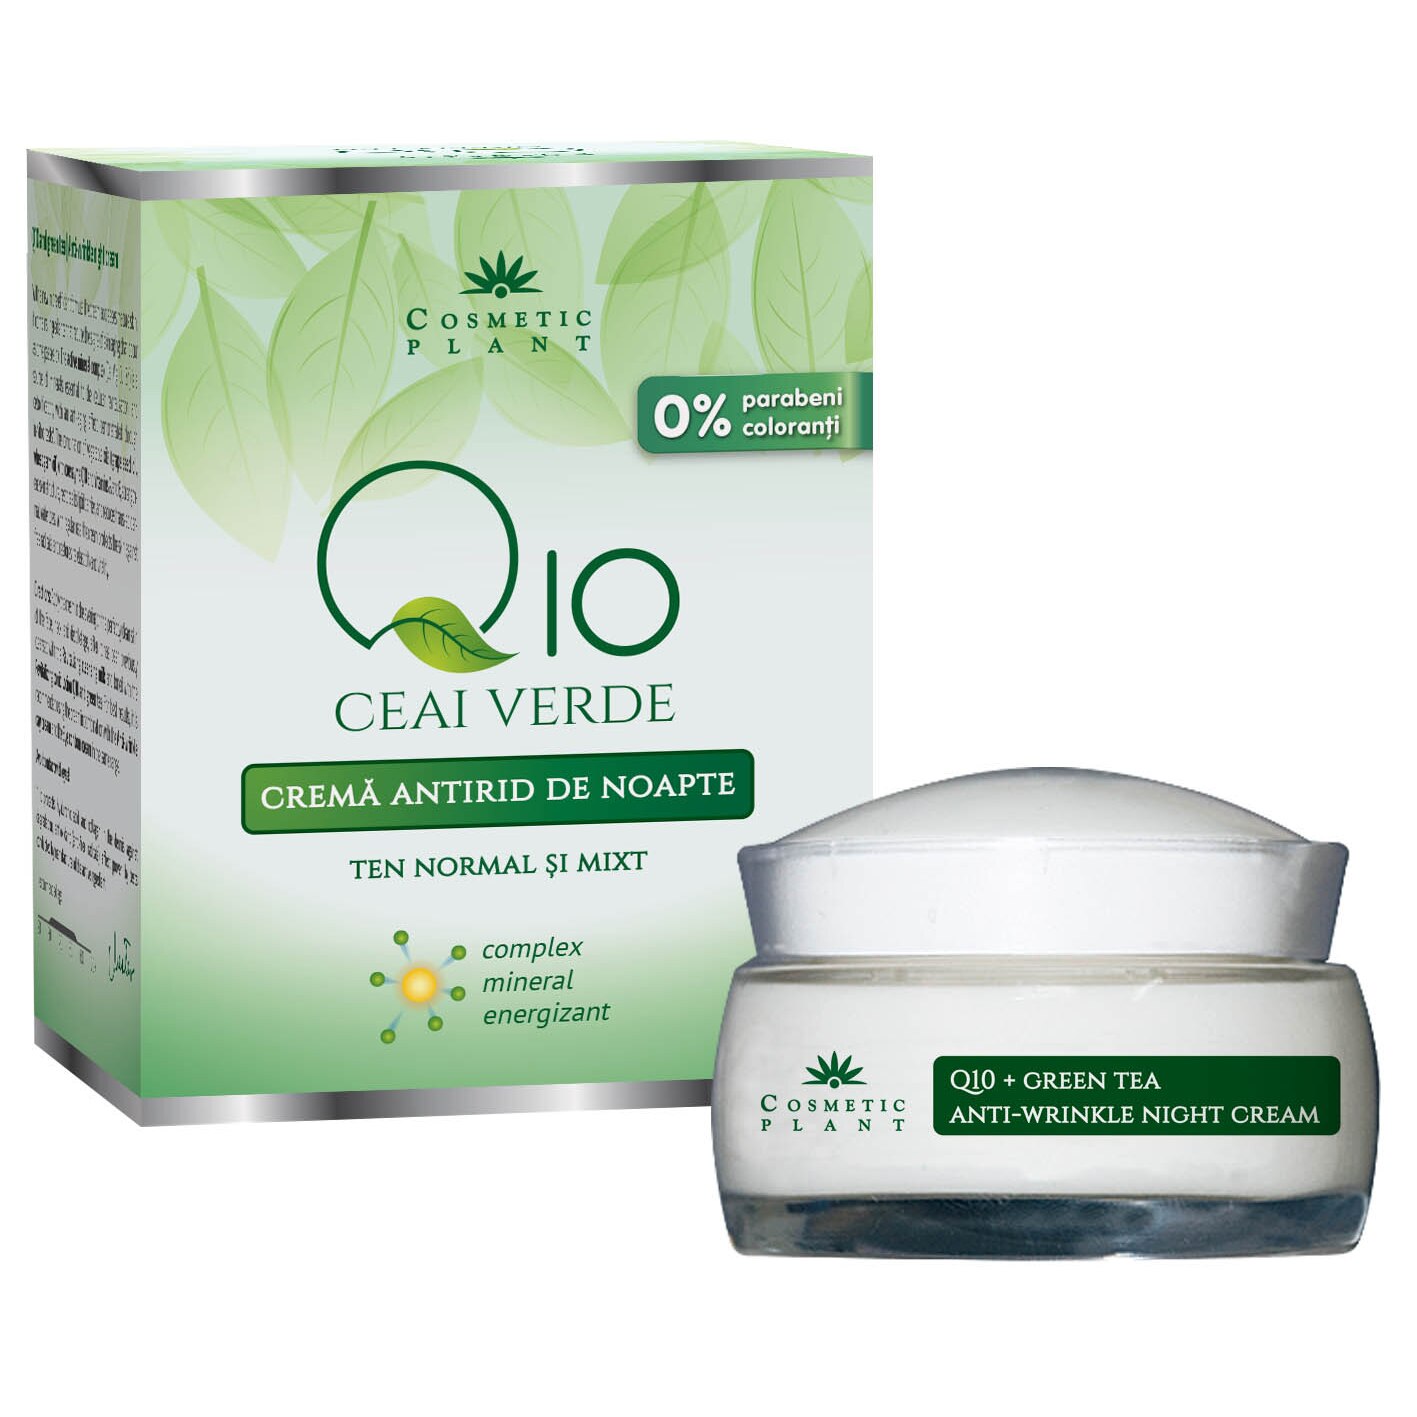 Crema antirid de noapte Cosmetic Plant, cu ceai verde Q10, 50 ml - Auchan online